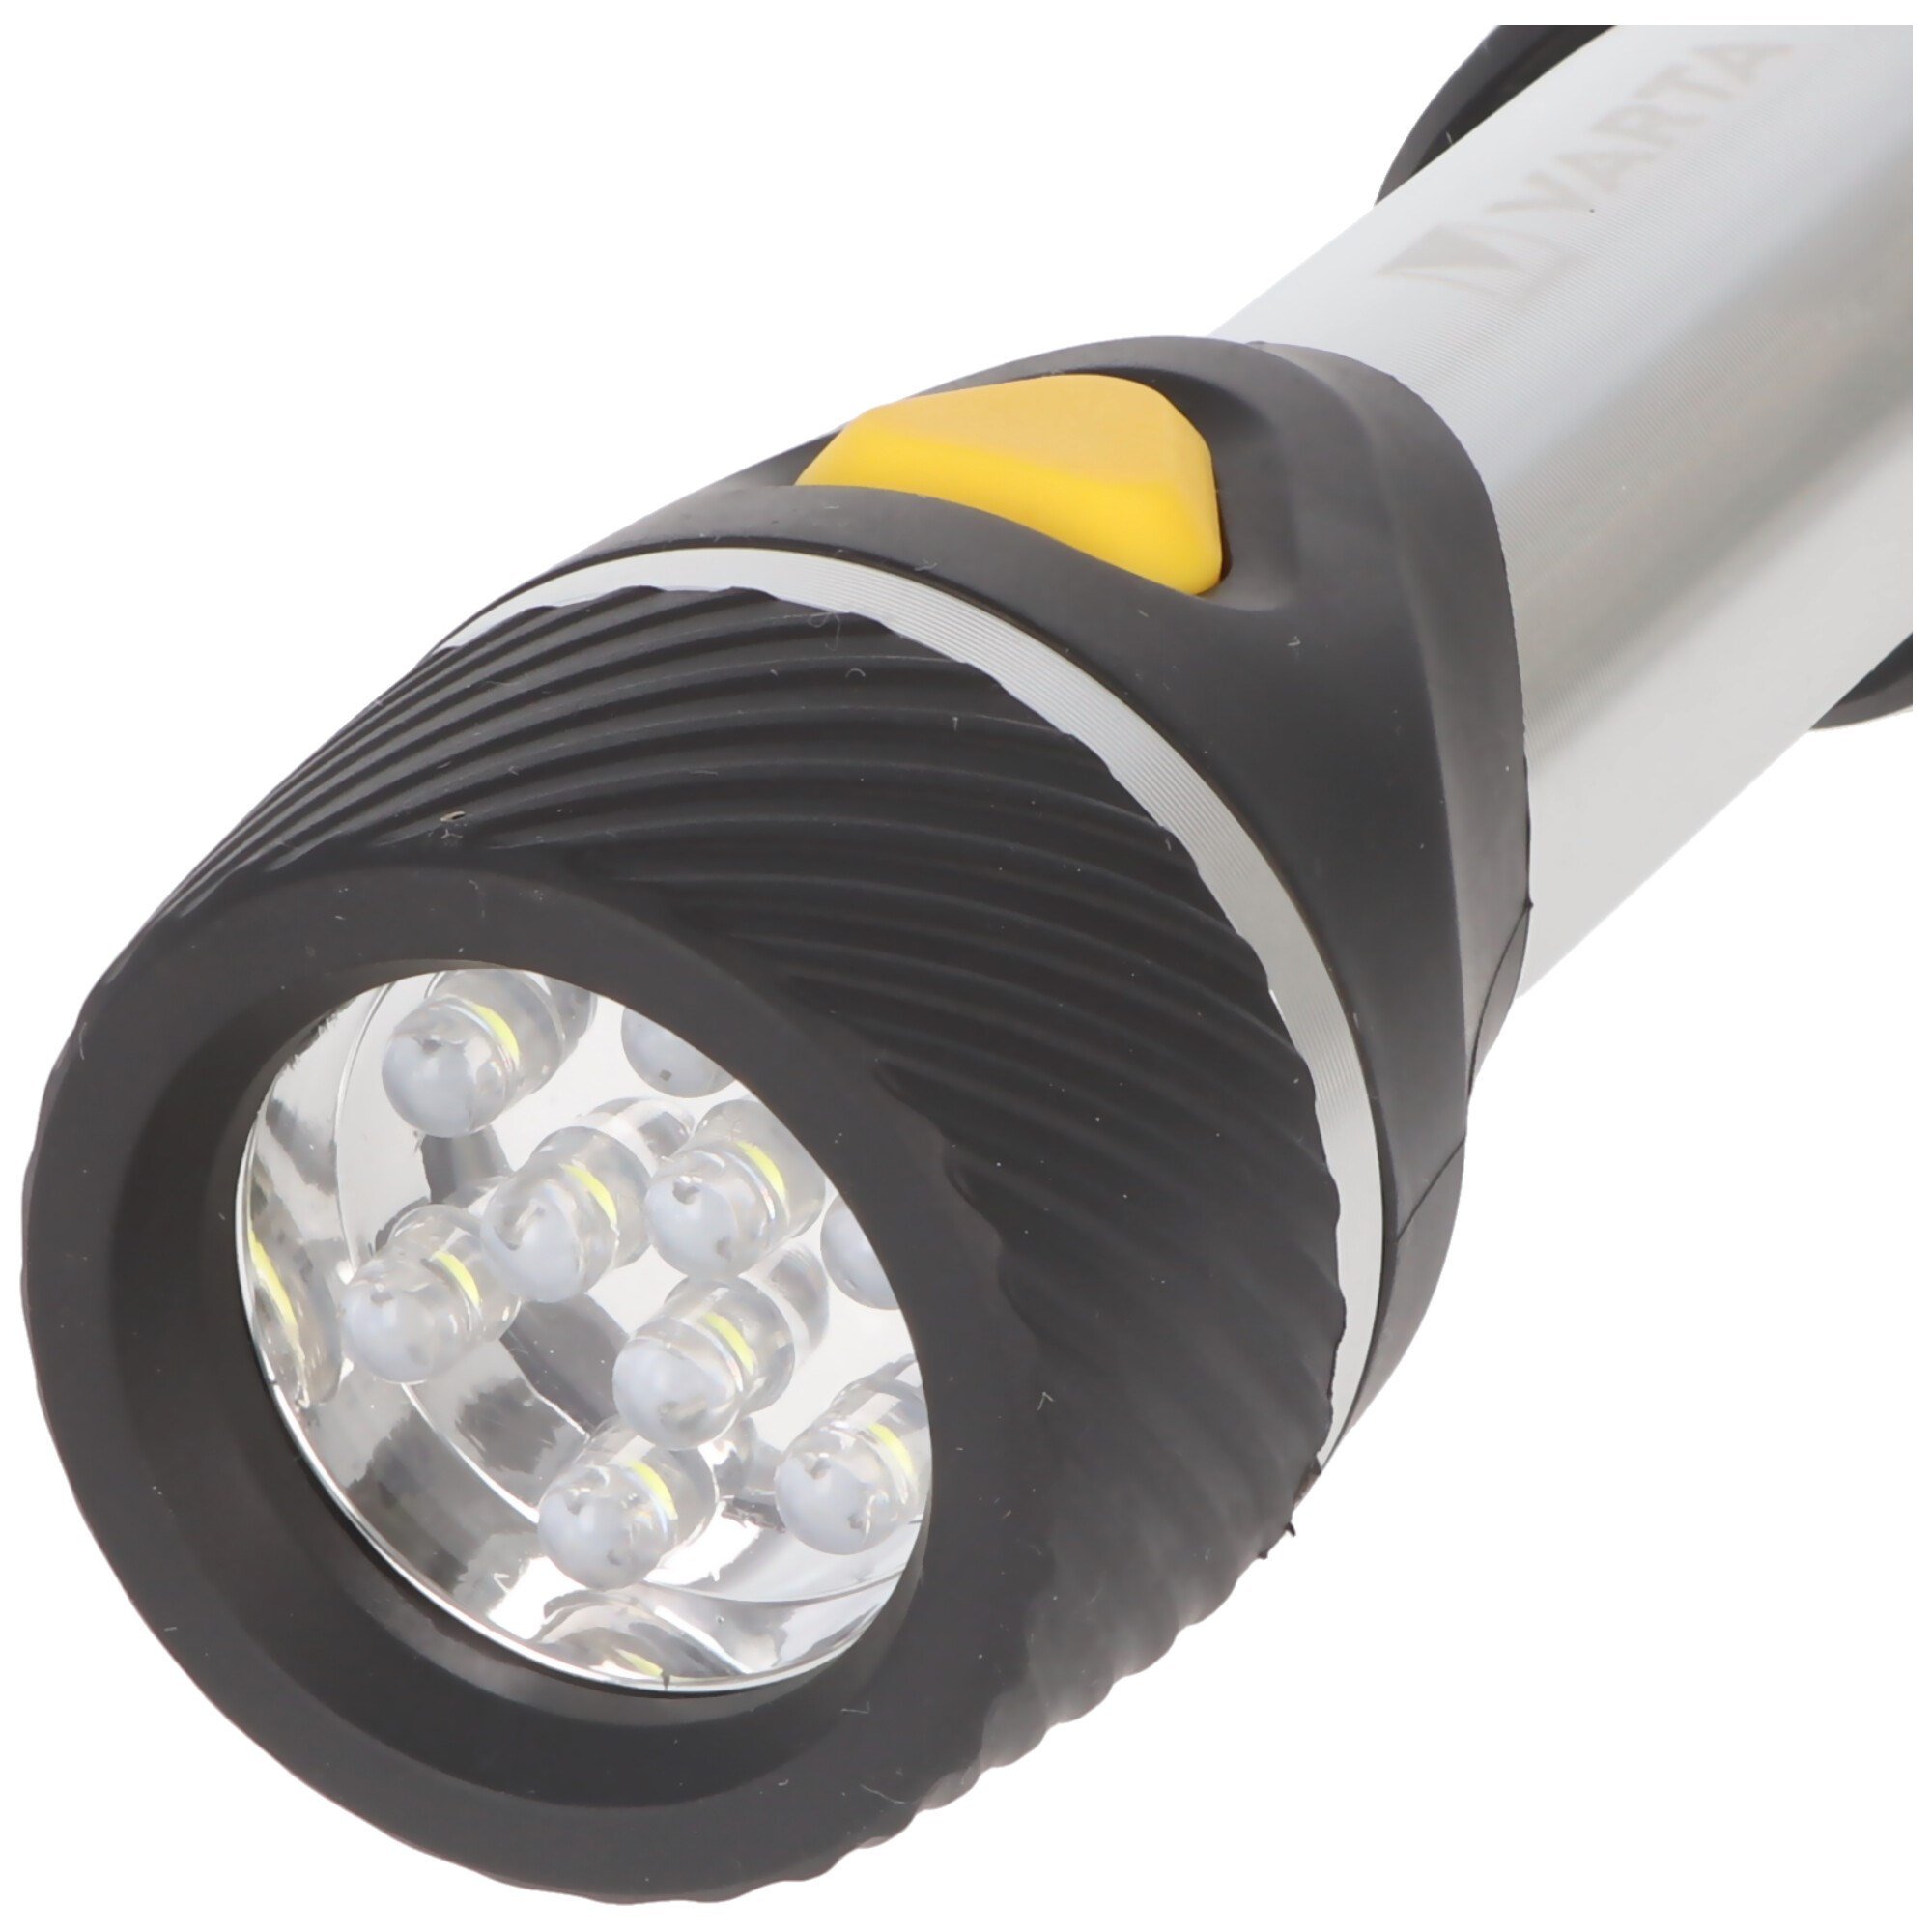 Varta LED el feneri Gün Işığı, Çoklu LED F20 40lm, 2x alkalin AA piller  dahil, perakende